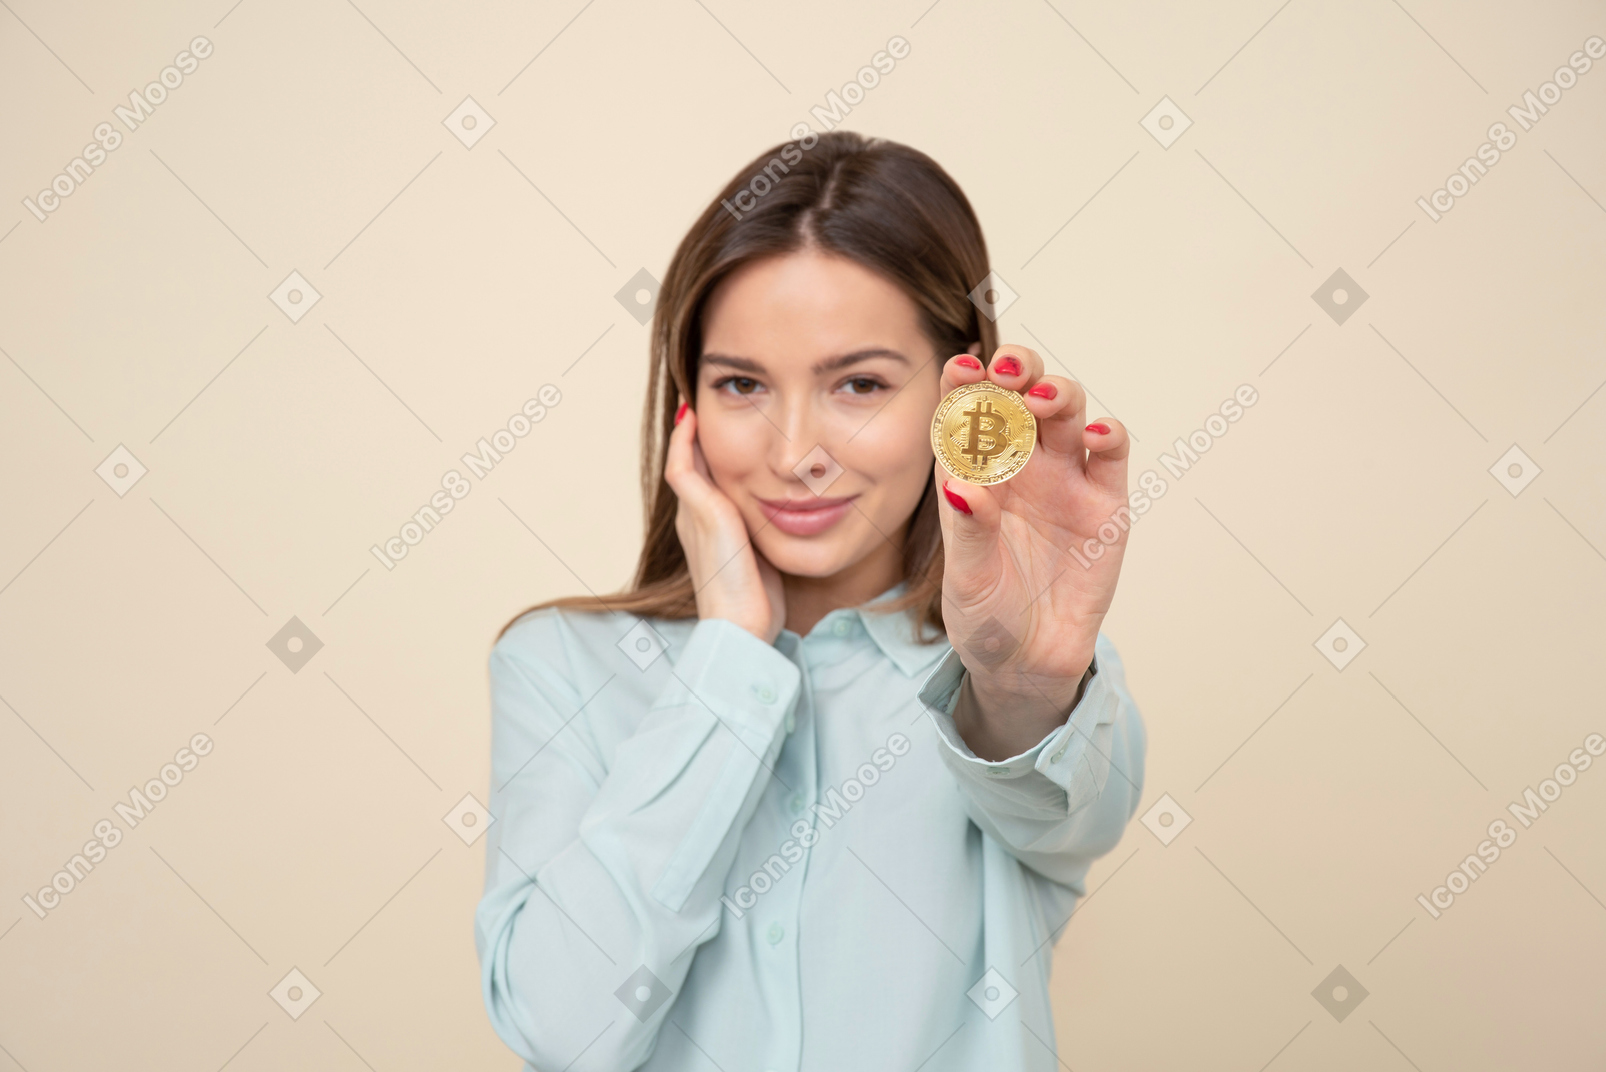 Jolie jeune fille montrant un bitcoin